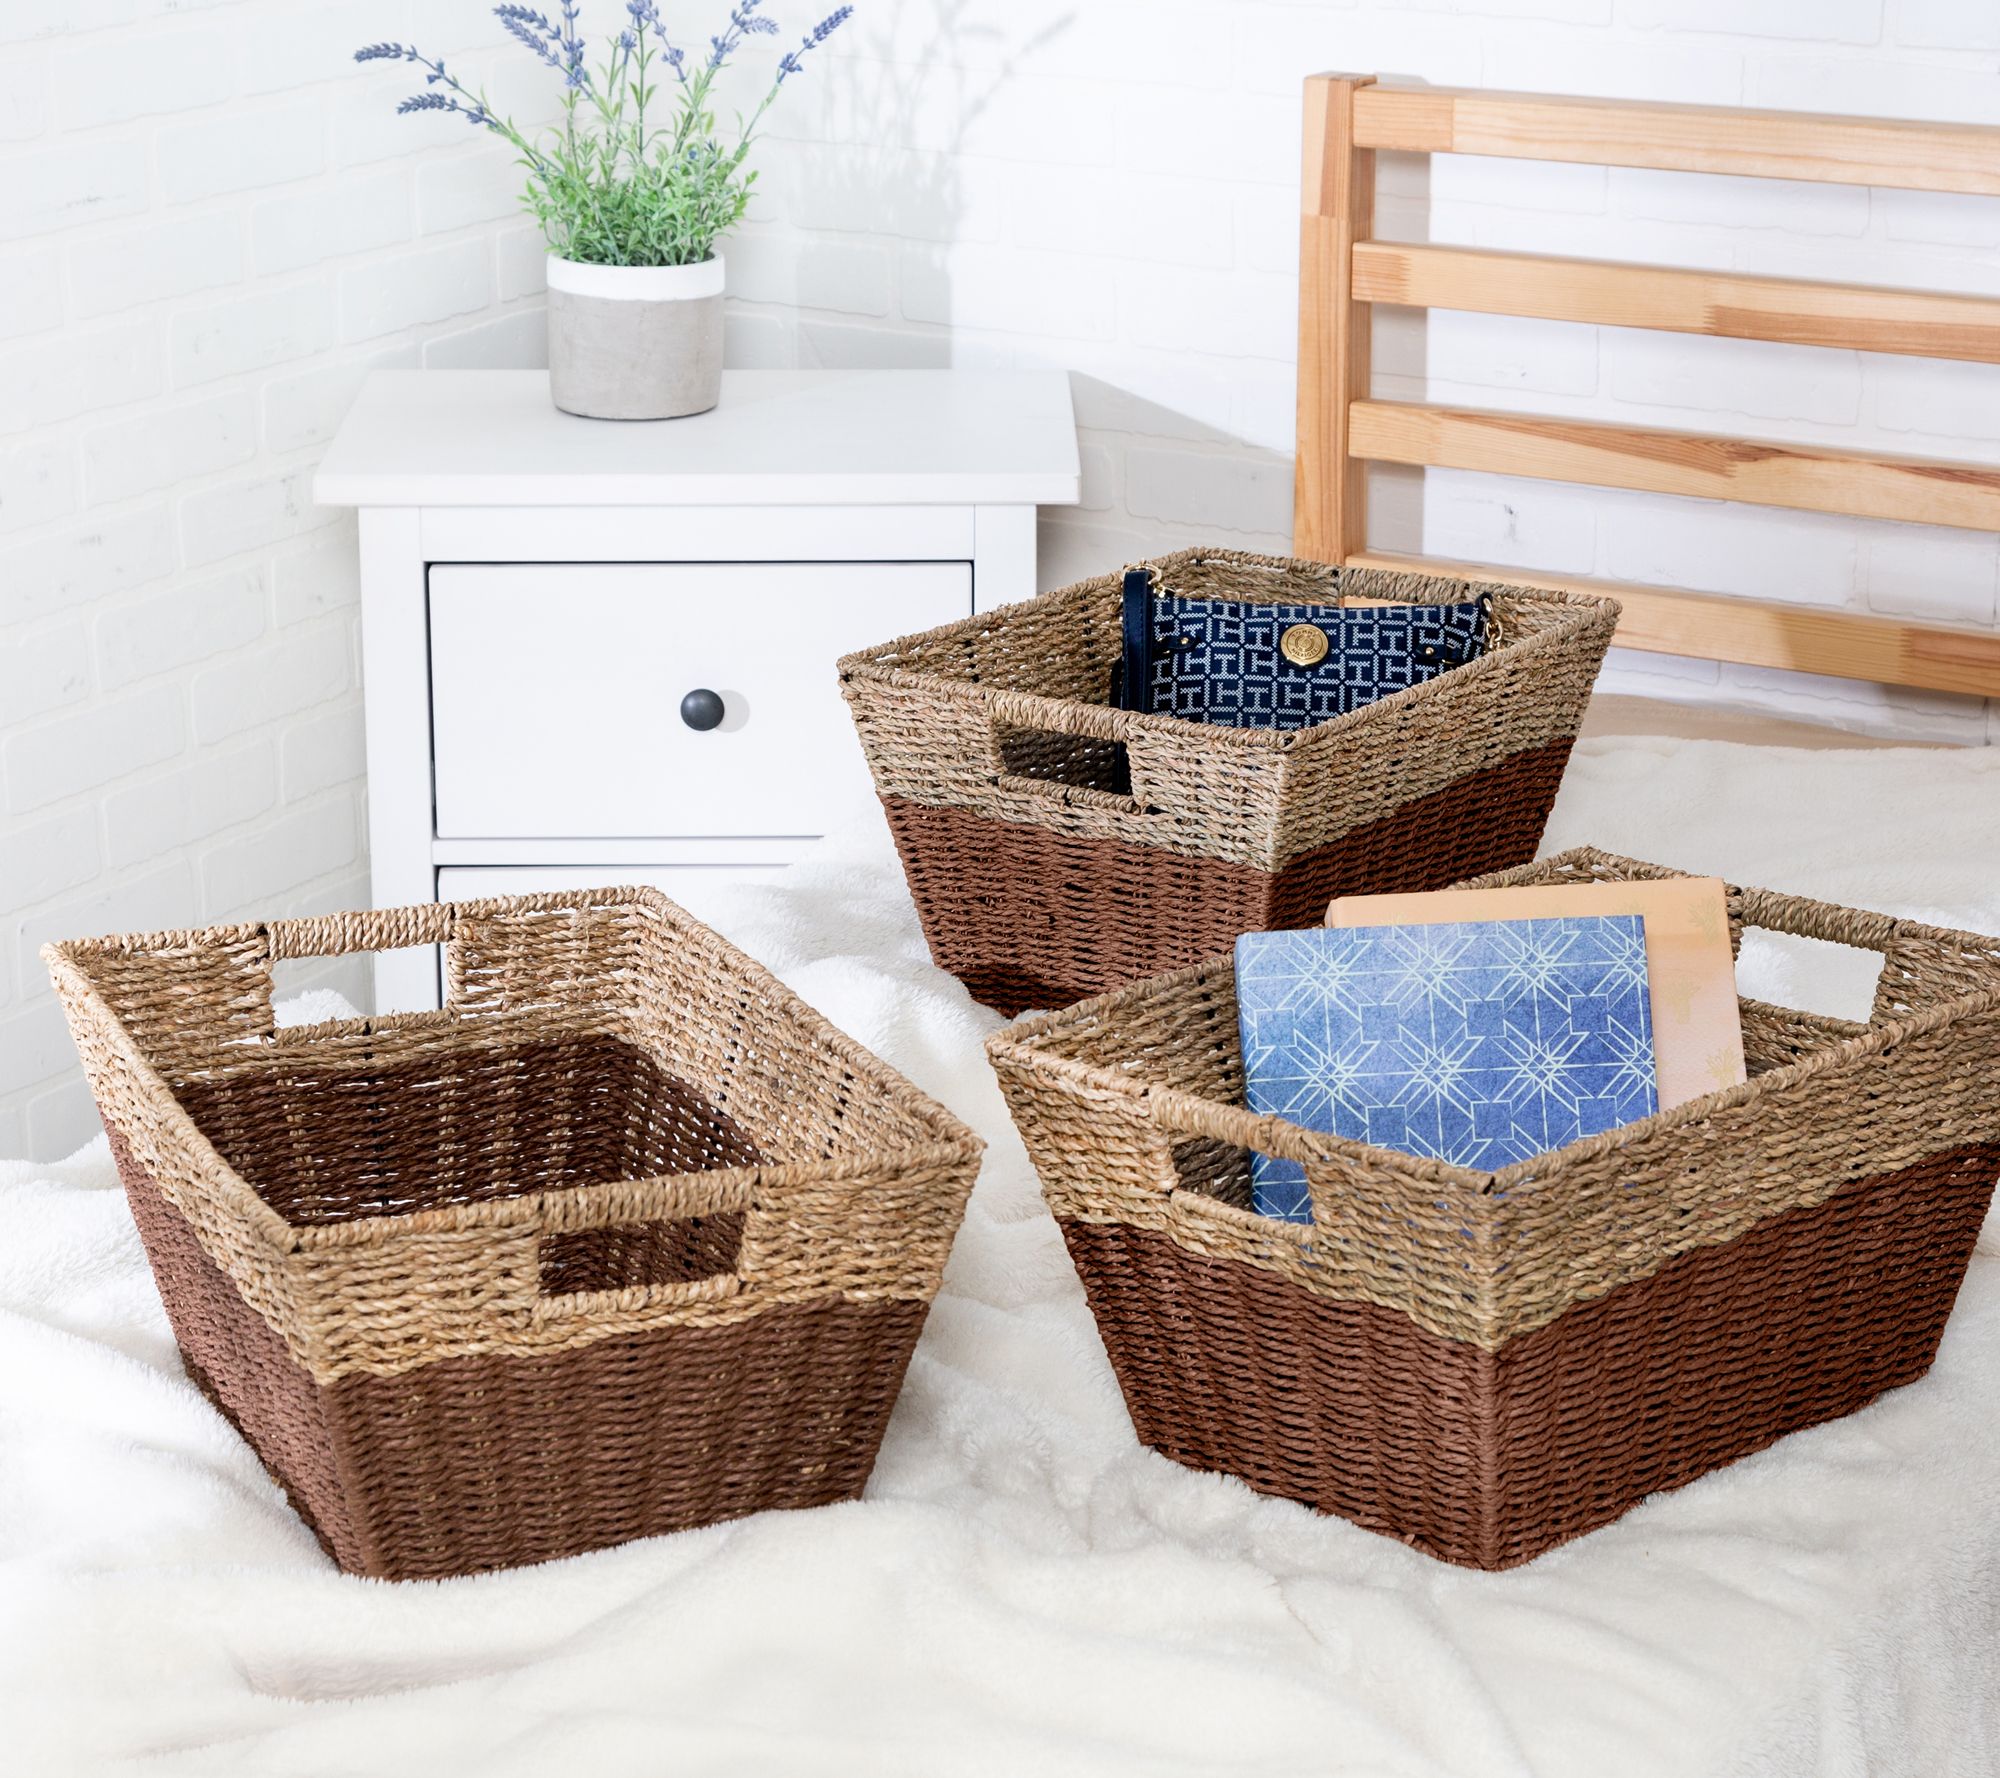 Black Wicker Storage Baskets - Set of 3 Decorative Nesting Boxes